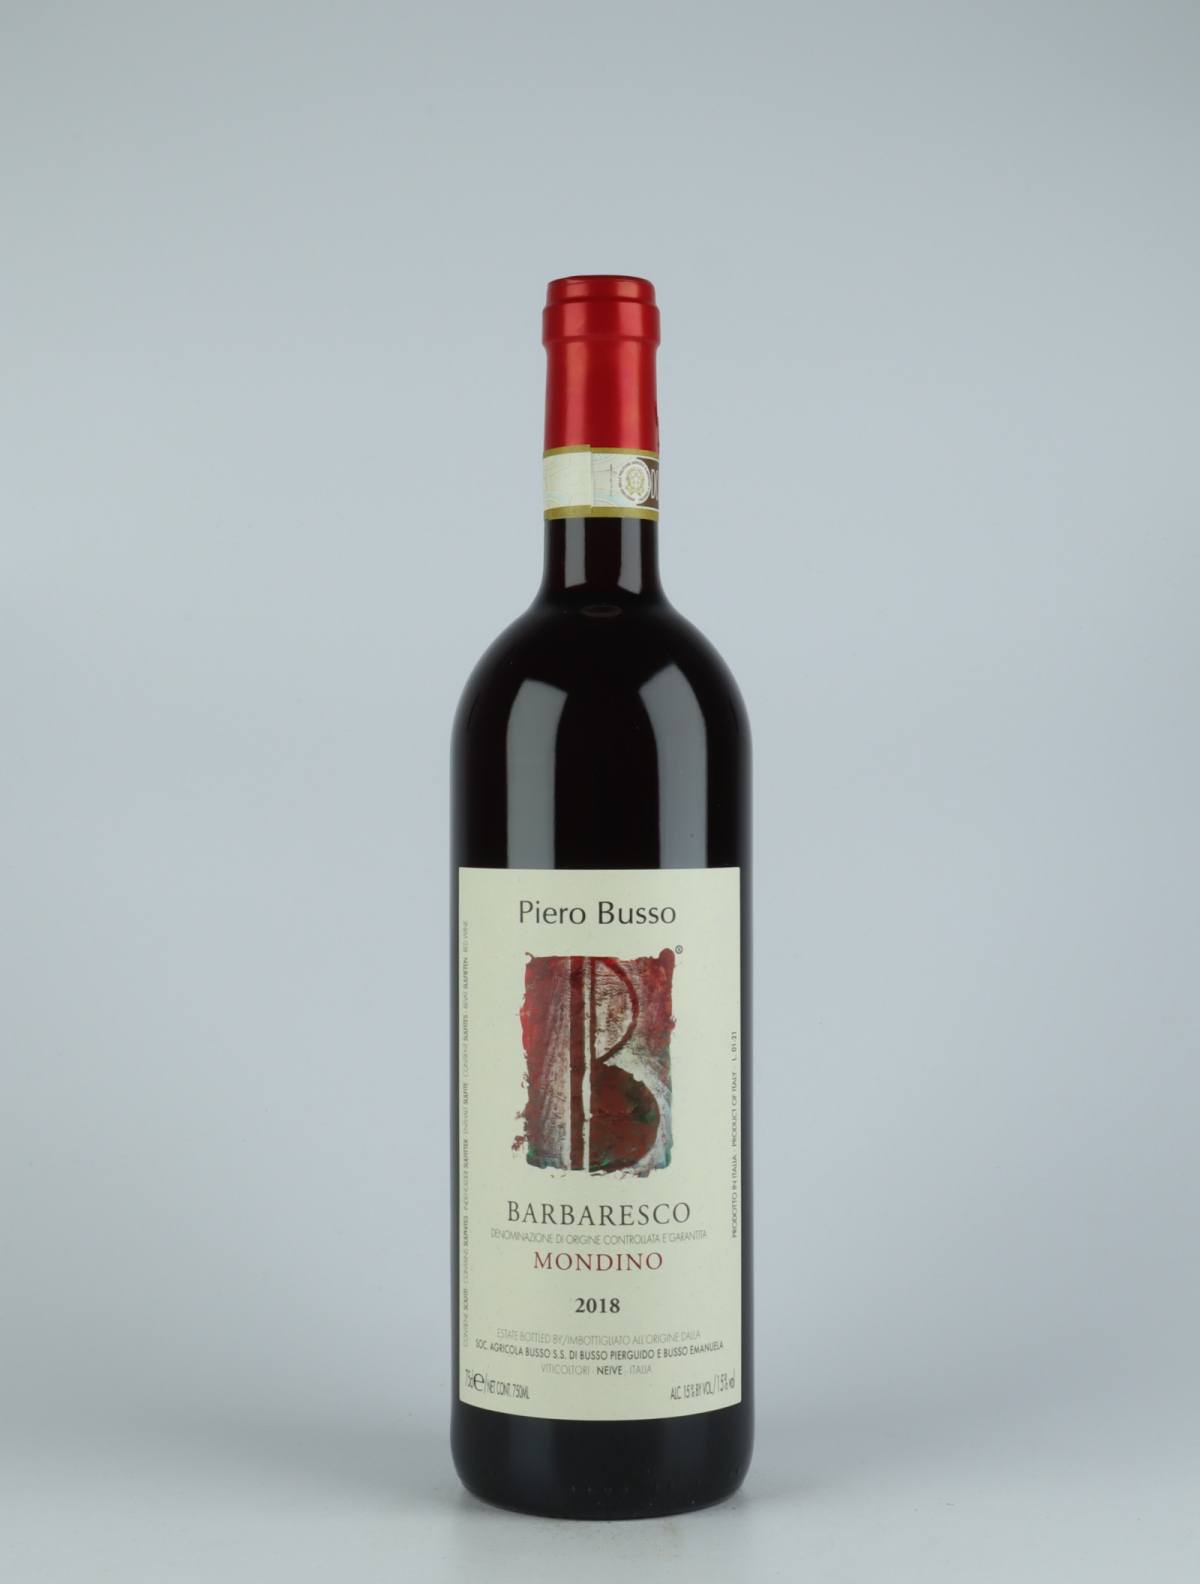 A bottle 2018 Barbaresco Mondino Red wine from Piero Busso, Piedmont in Italy